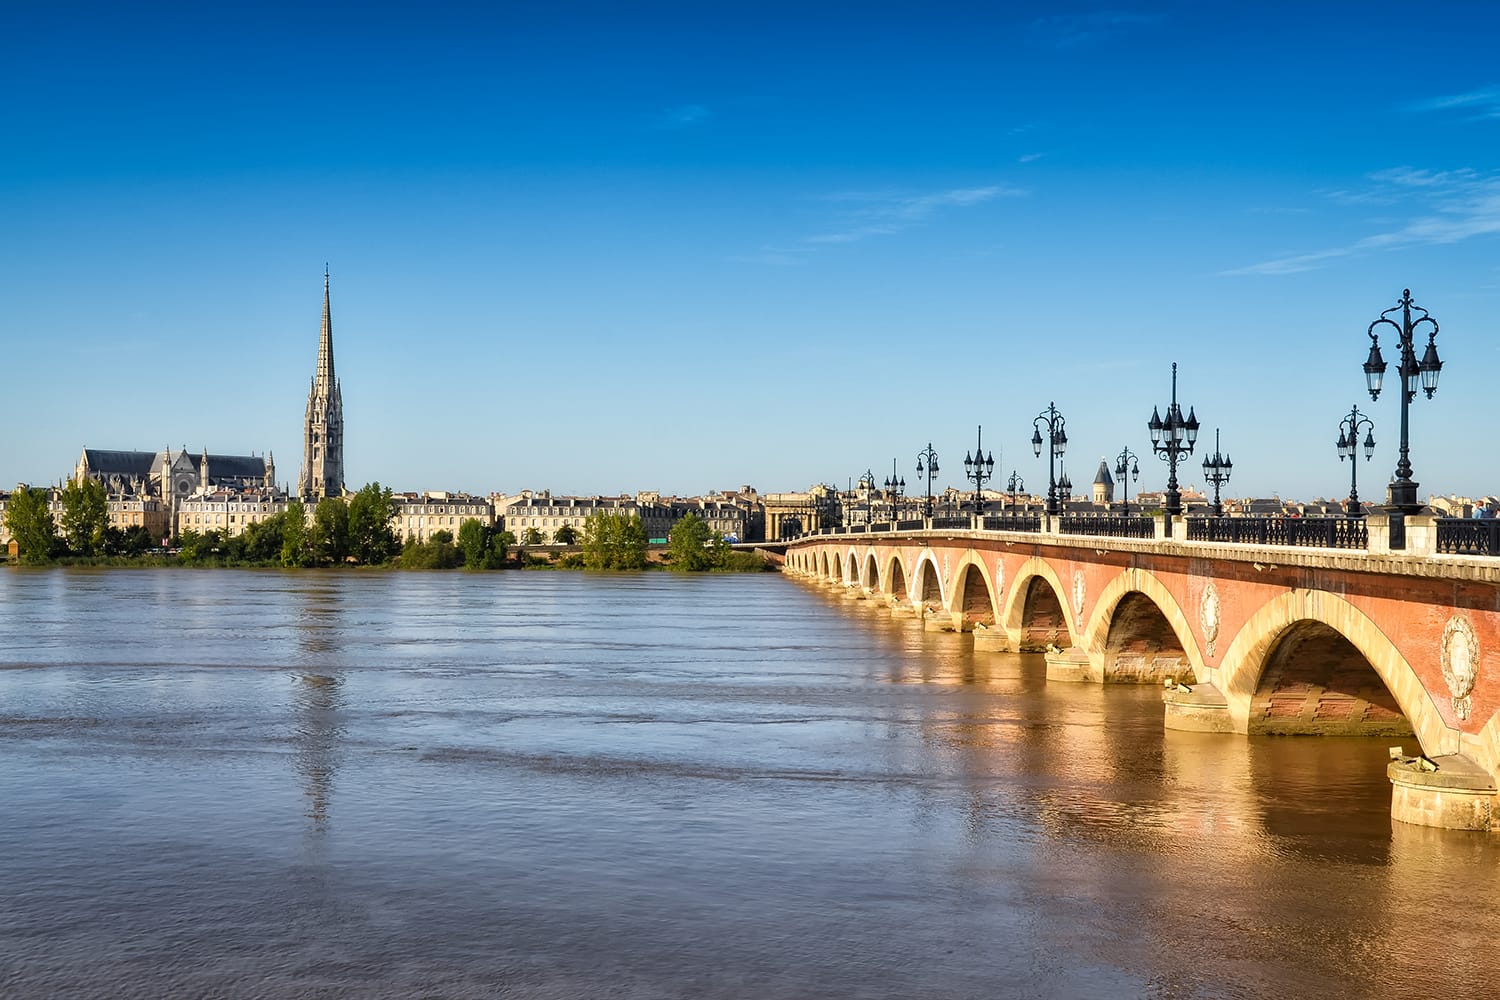 Bordeaux river bridge with St Michel cathedral